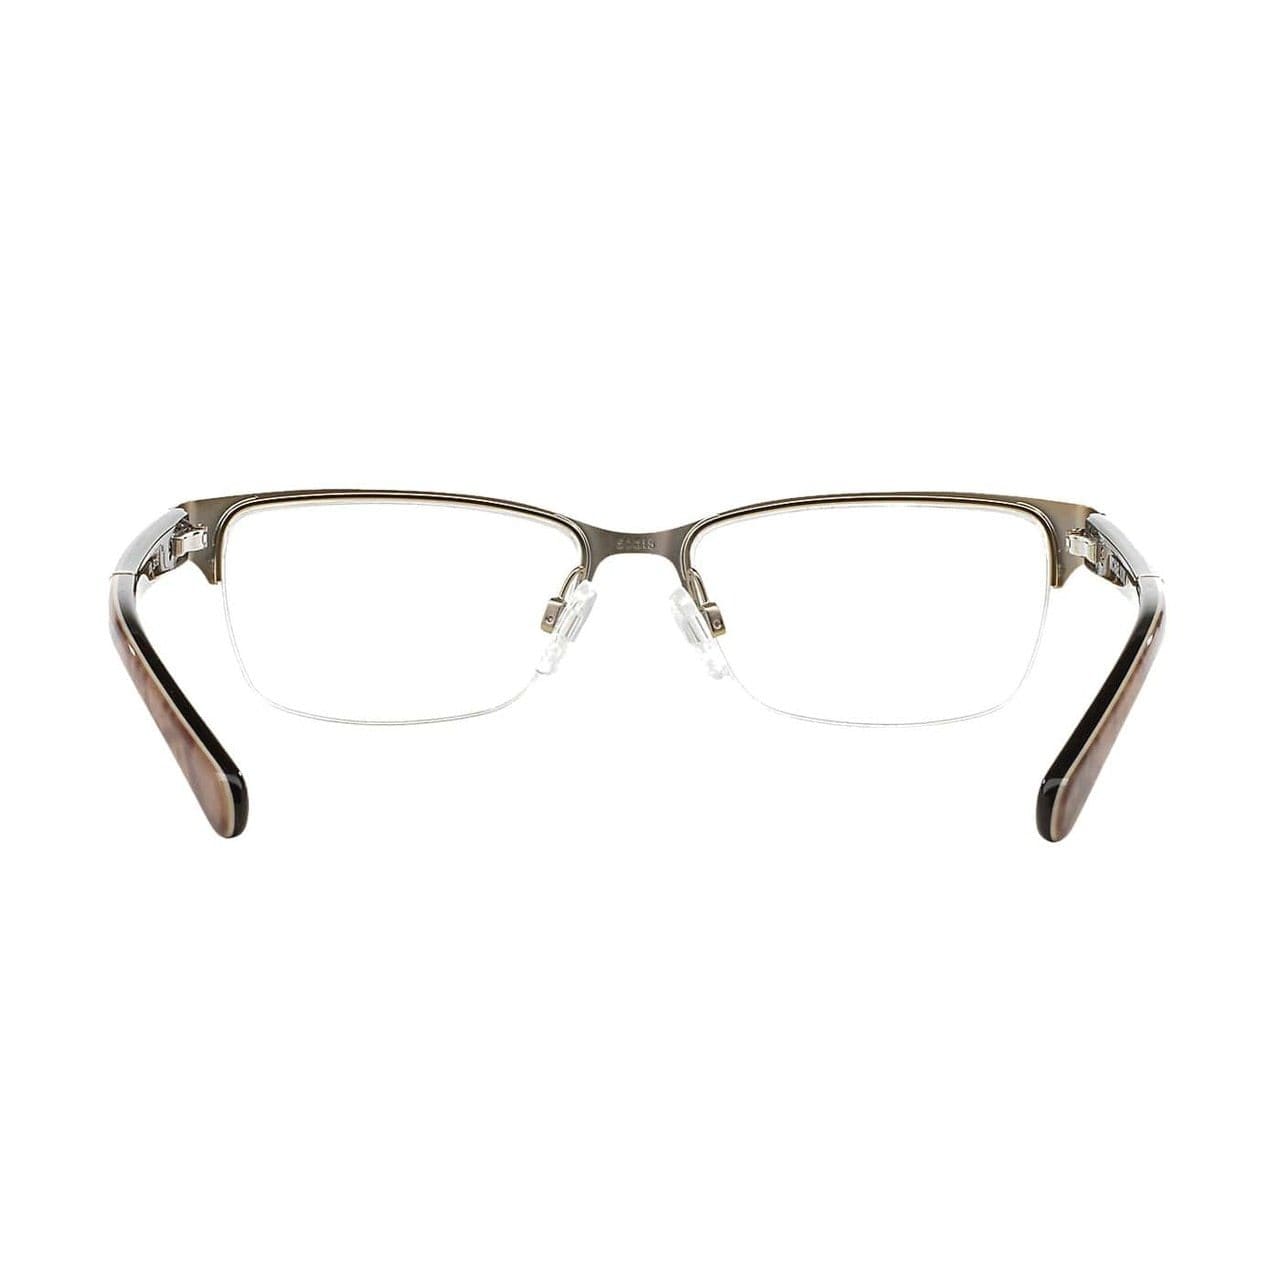 Michael Kors MK 7002-1006 Maracaibo Satin Gold Rectangular Metal Eyeglasses 725125943925